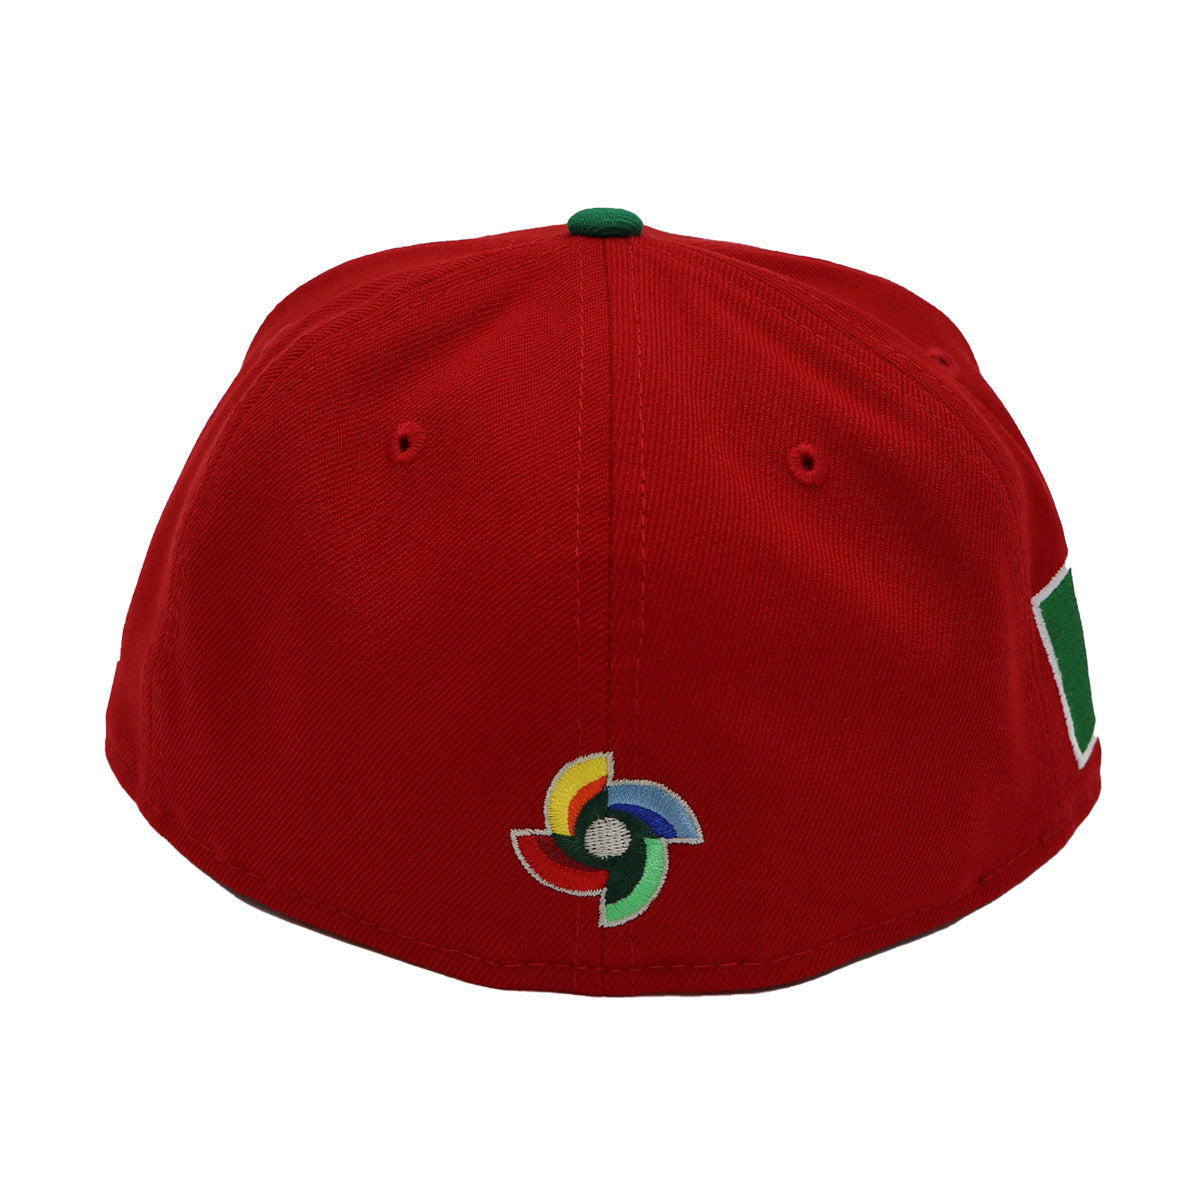 Mexico Era World Hat New – Caliwearsd 2-Tone Red/Green Classic Baseball 59Fifty